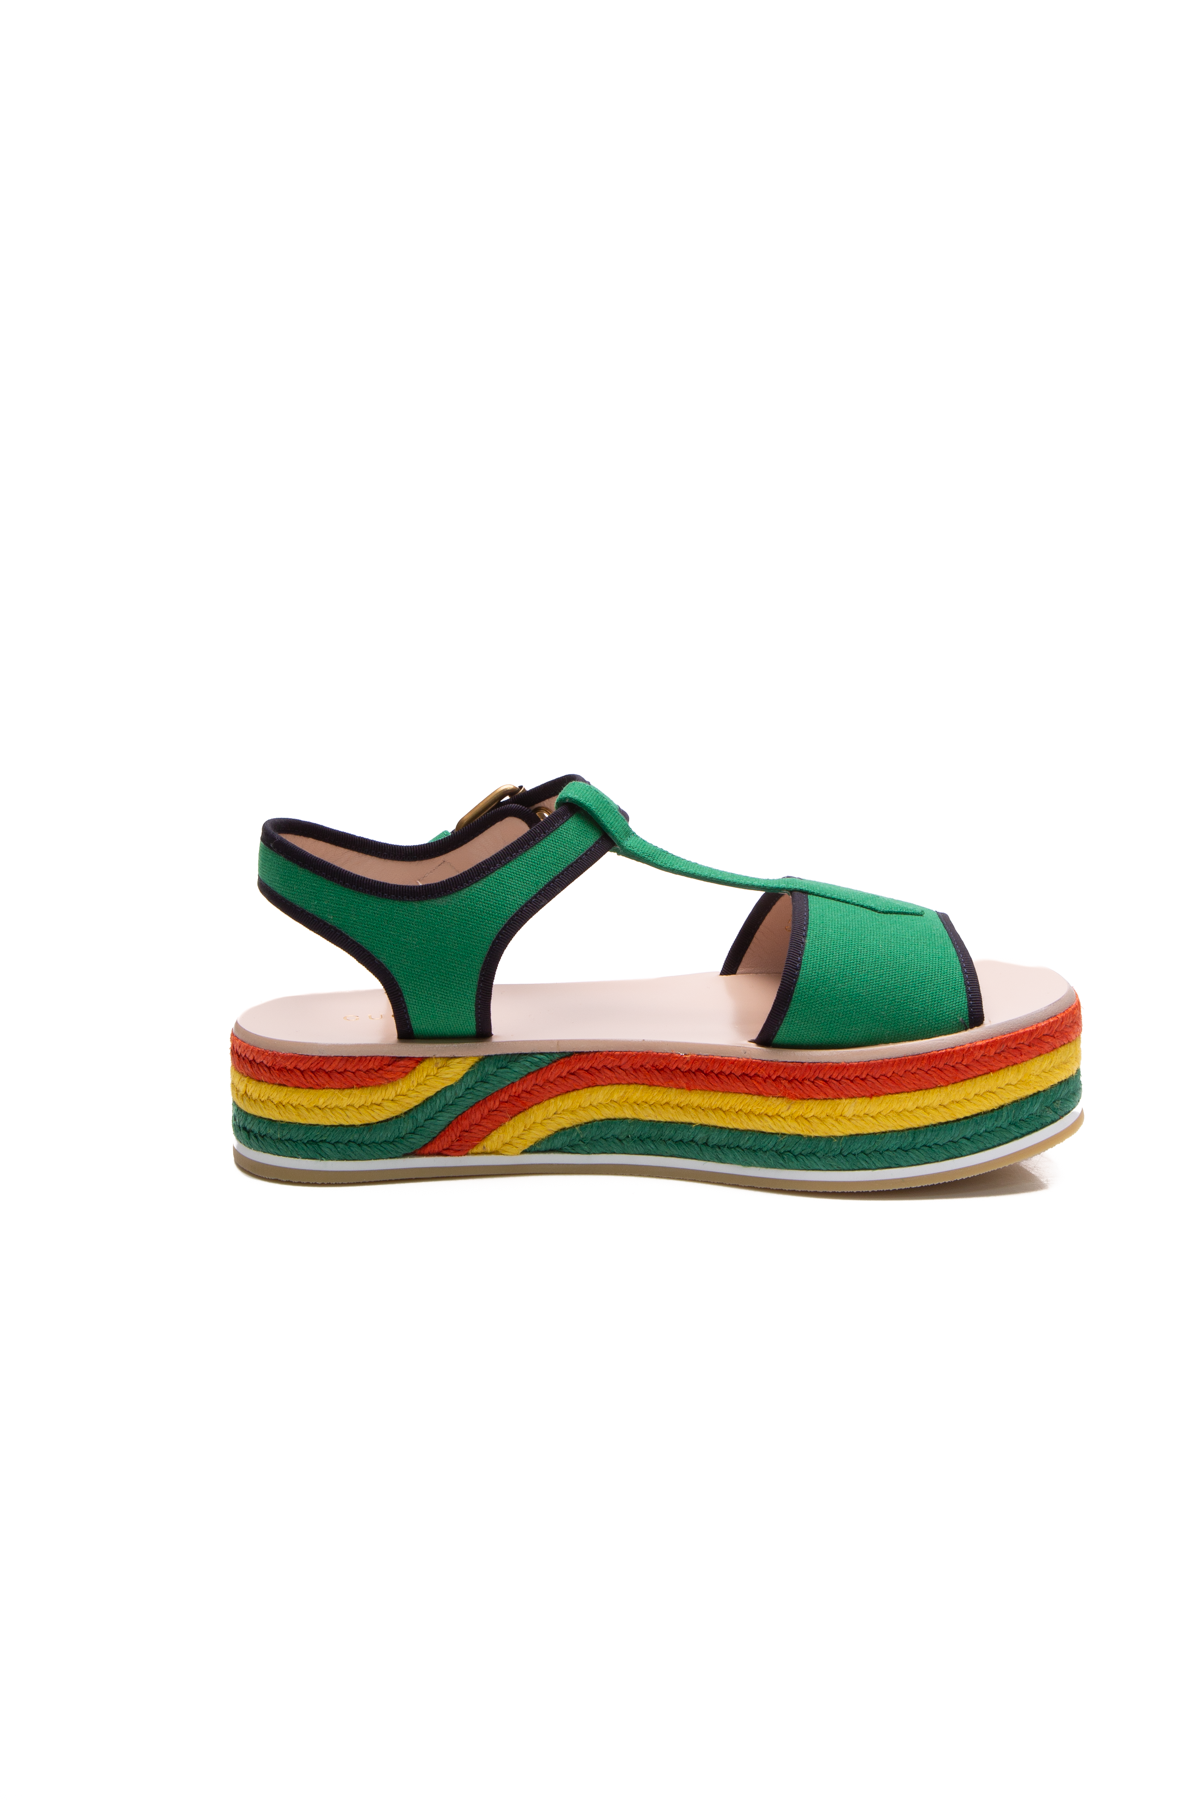 Gucci Multicolor Canvas And Web Lilibeth Platform Wedge Sandals Size 36  Gucci